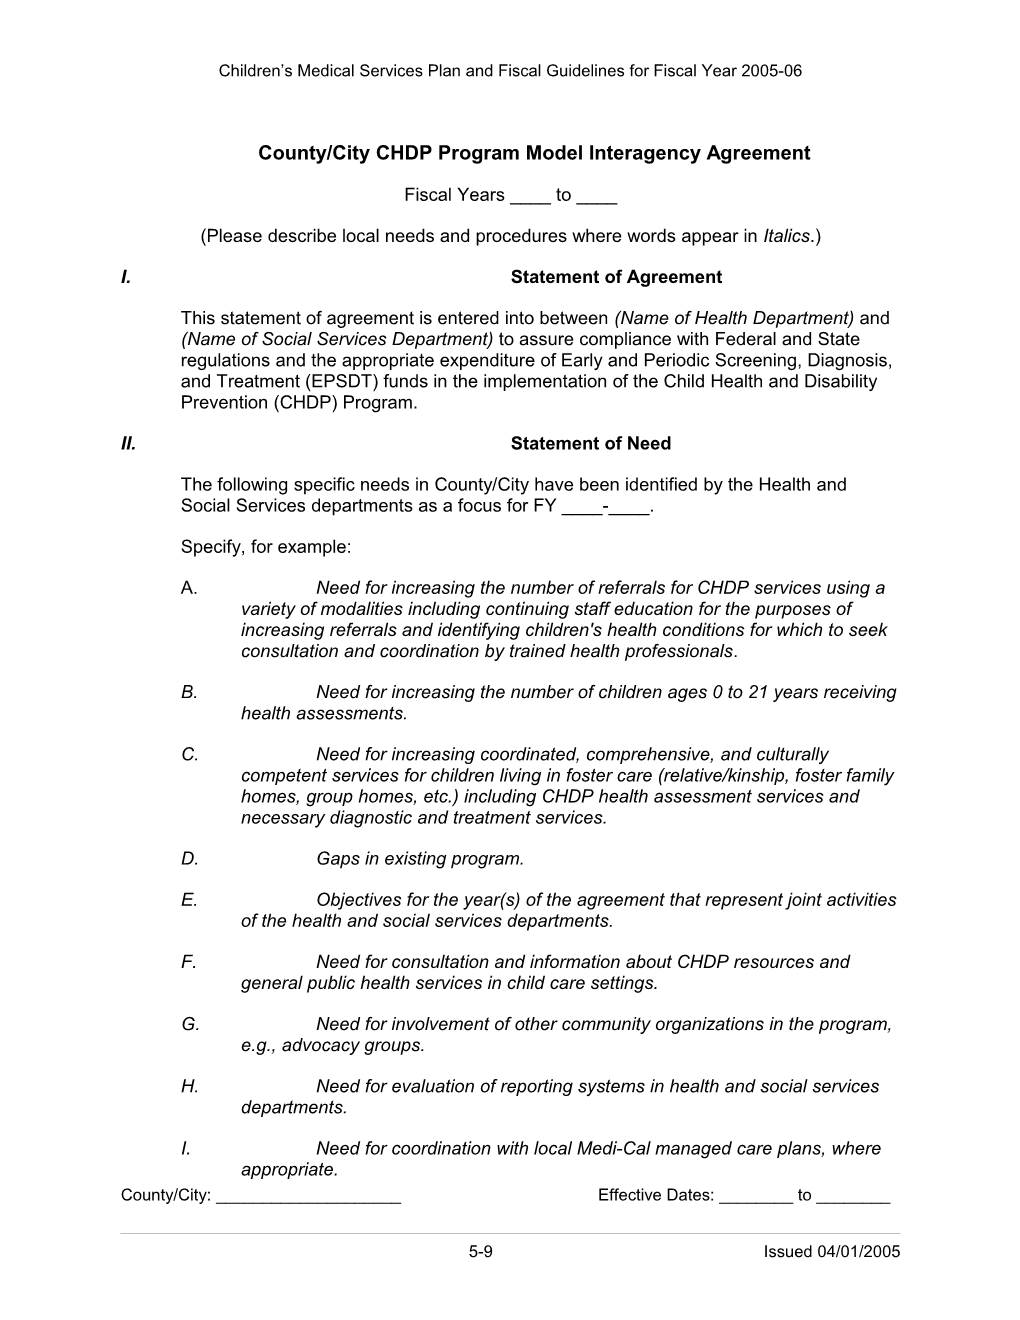 County/City CHDP Program Model Interagency Agreement